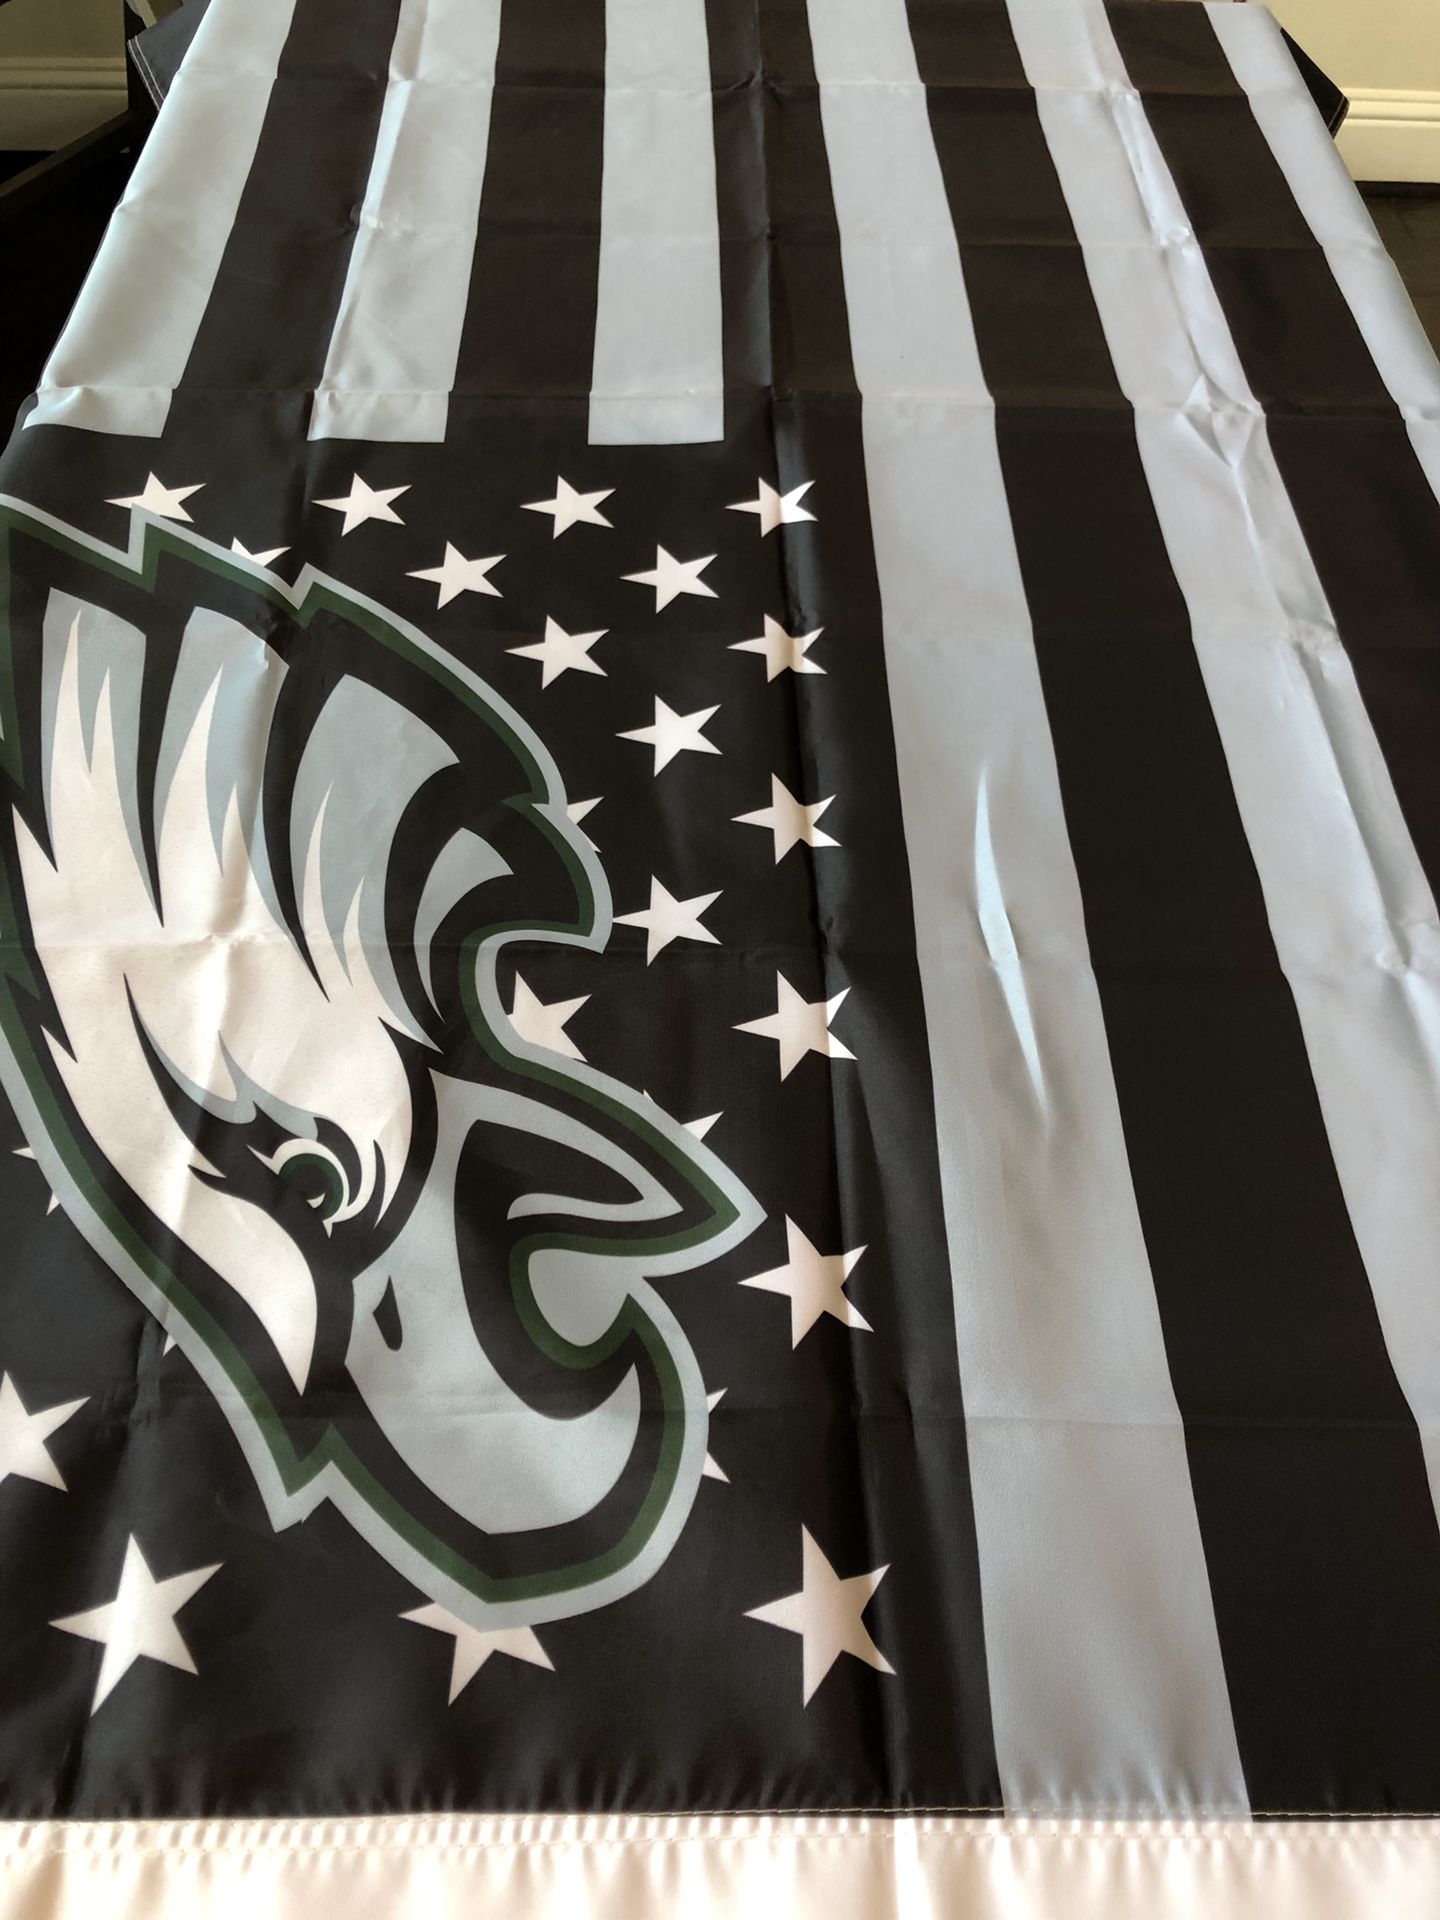 Philadelphia Eagles flags